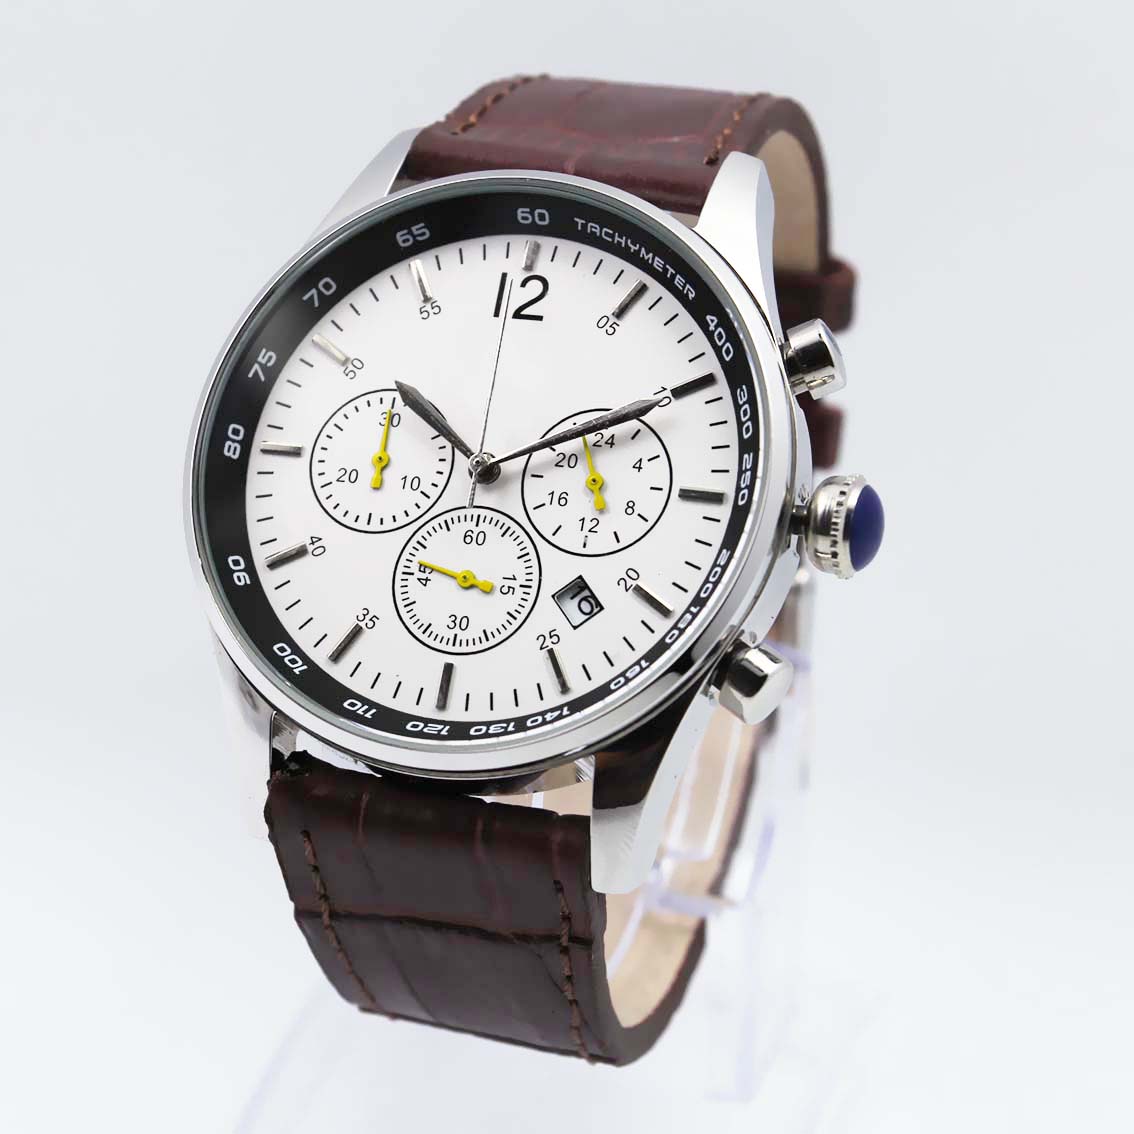 #02078Men's wristwatch quartz analog leather strap watch